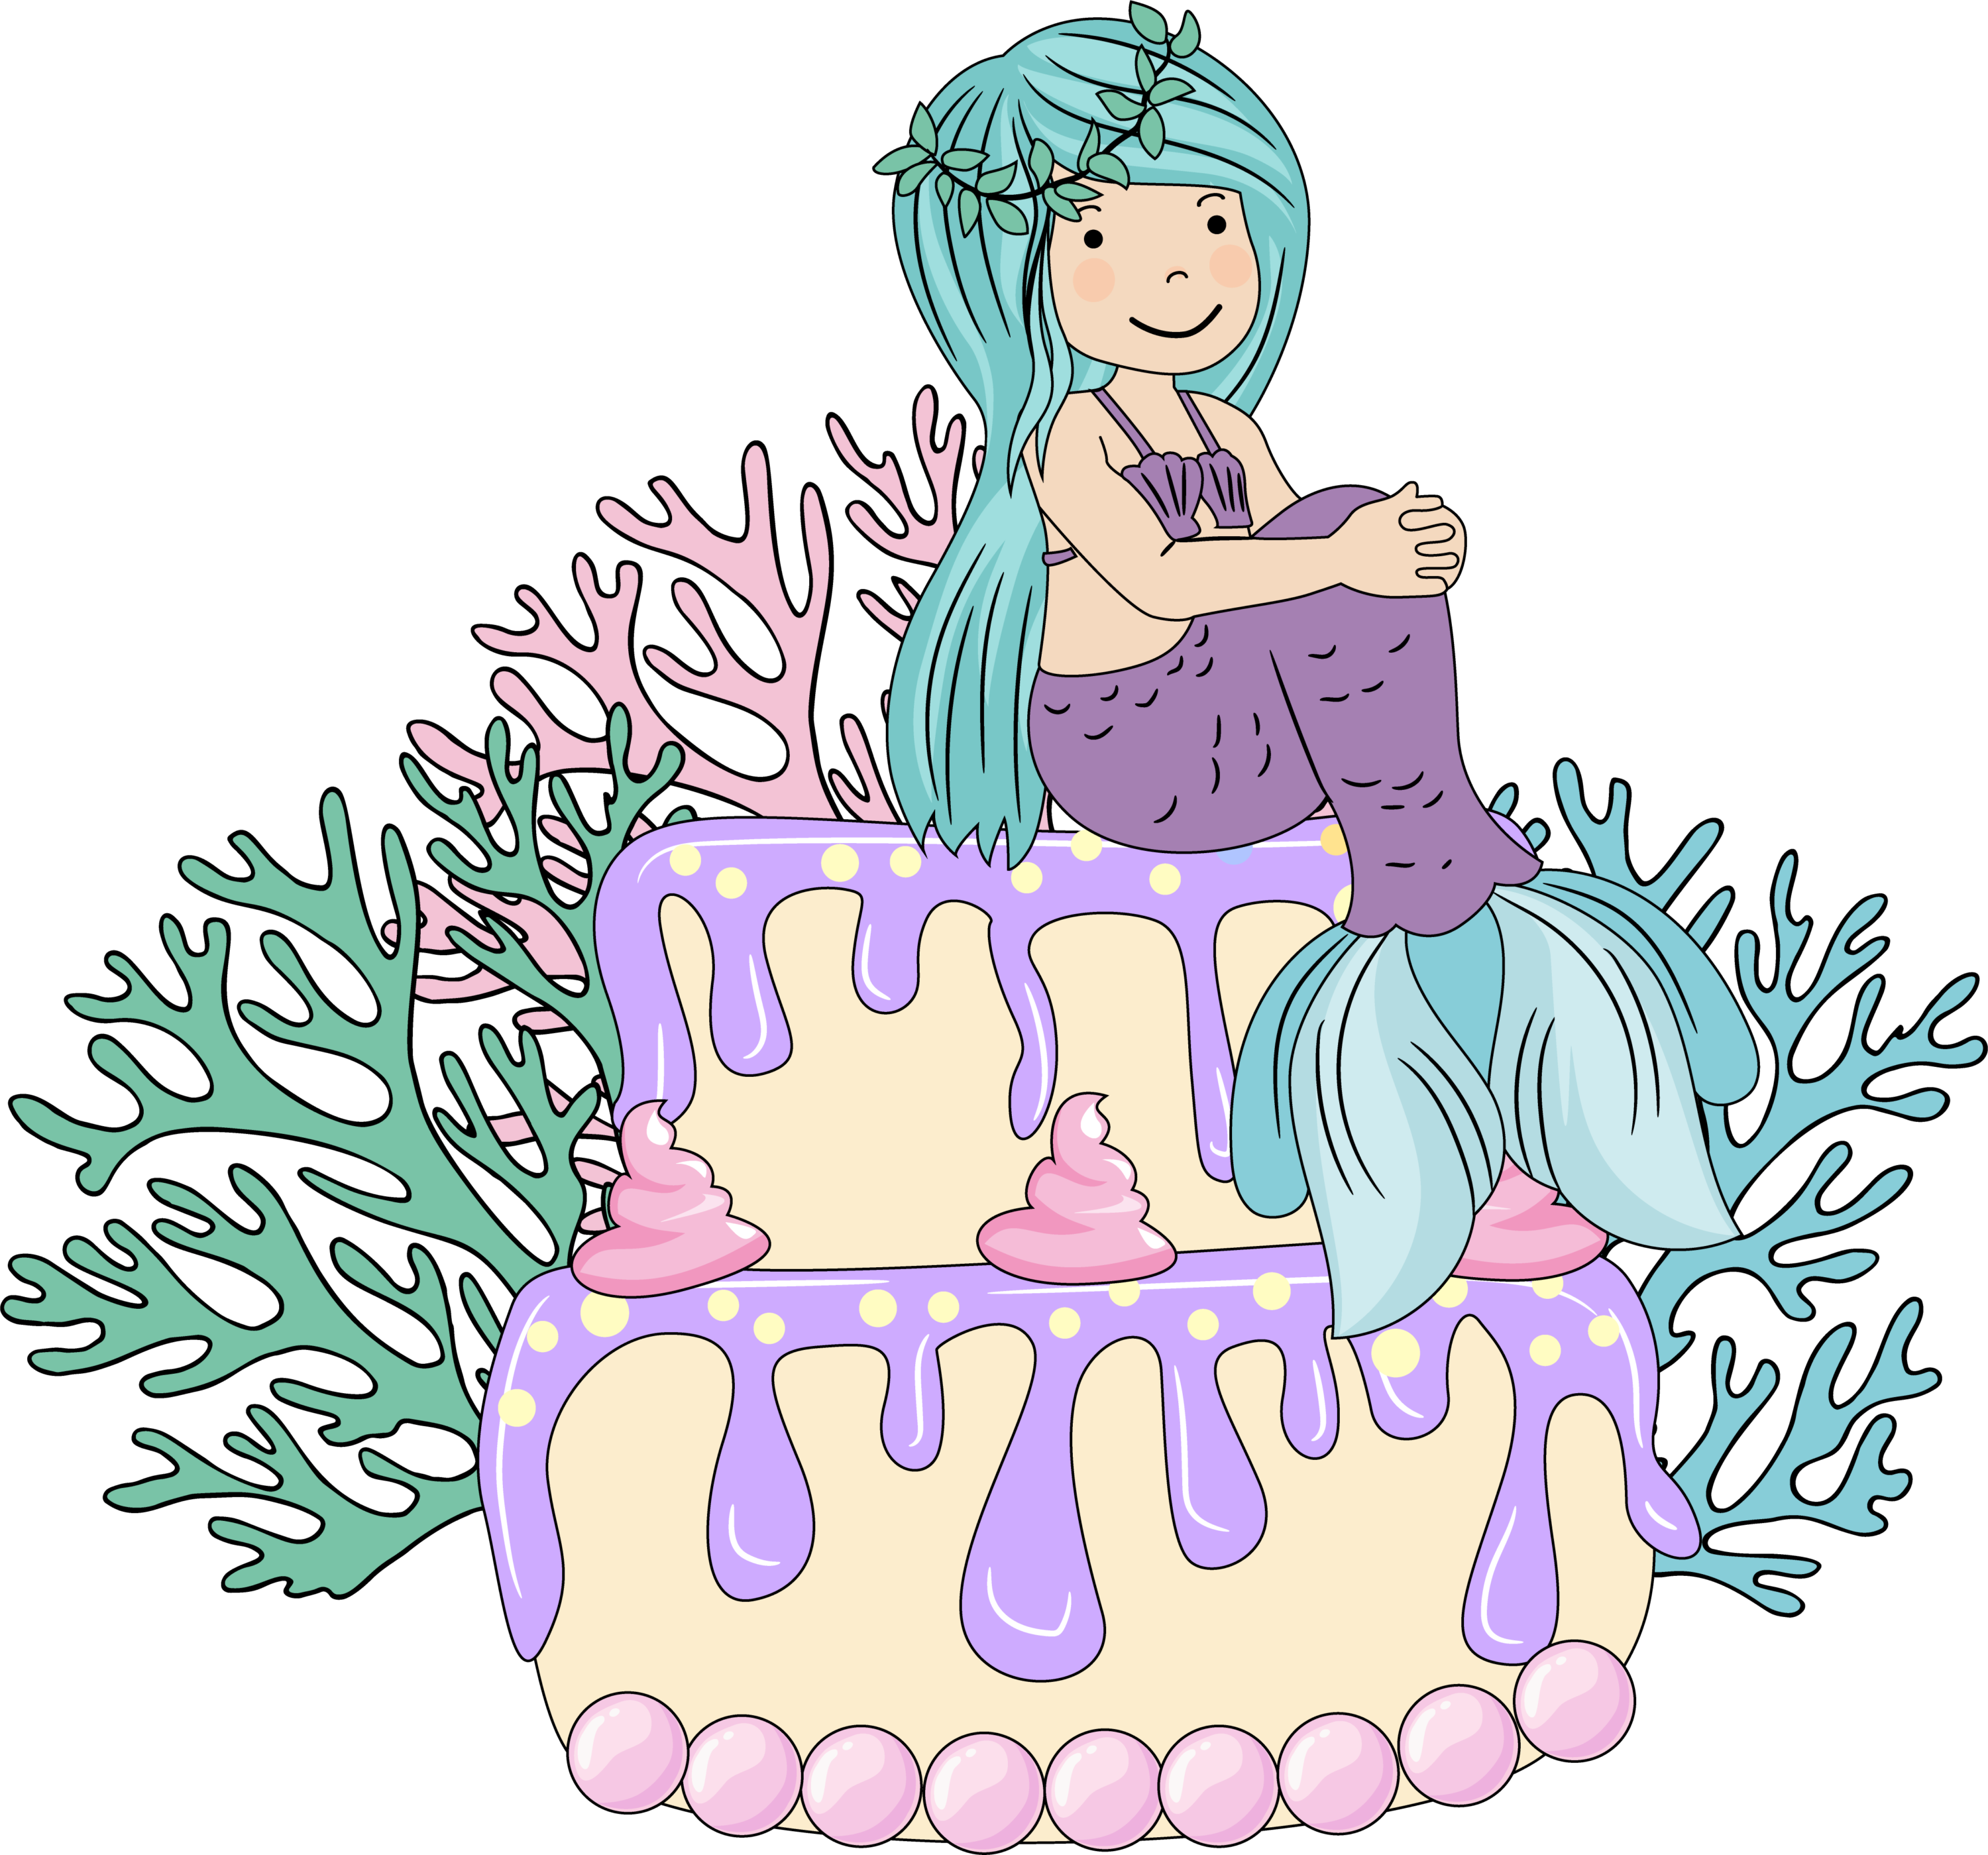 A beautiful mermaid on a cake.